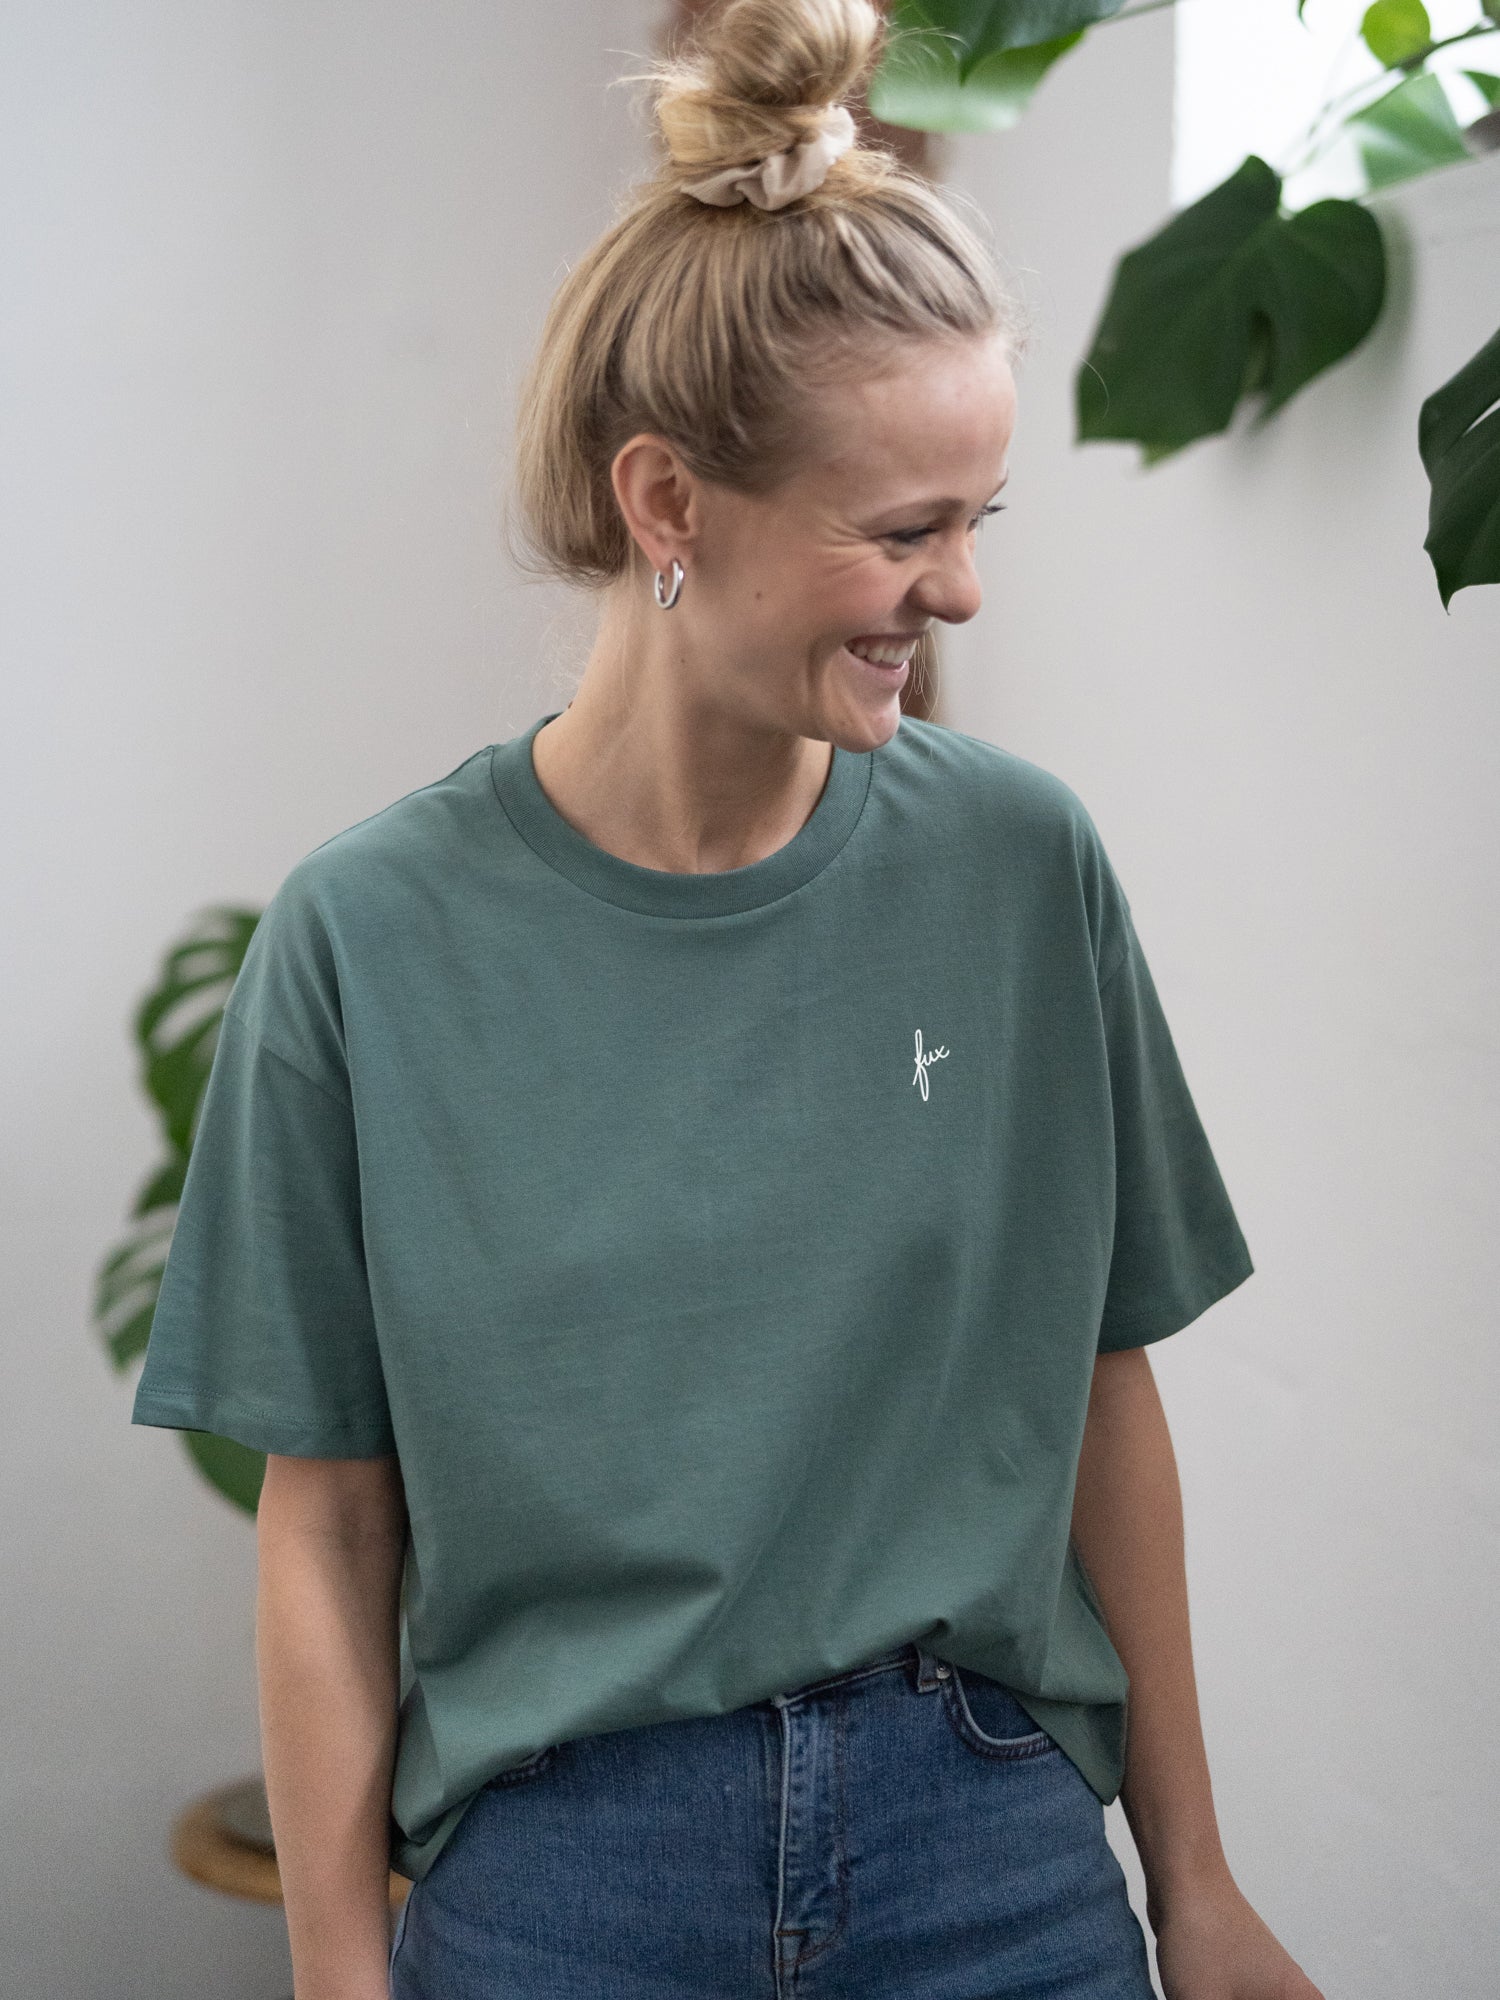 Greta trägt das Fair Fashion Frauen boxy T-Shirt in meeresgrün von FUXBAU